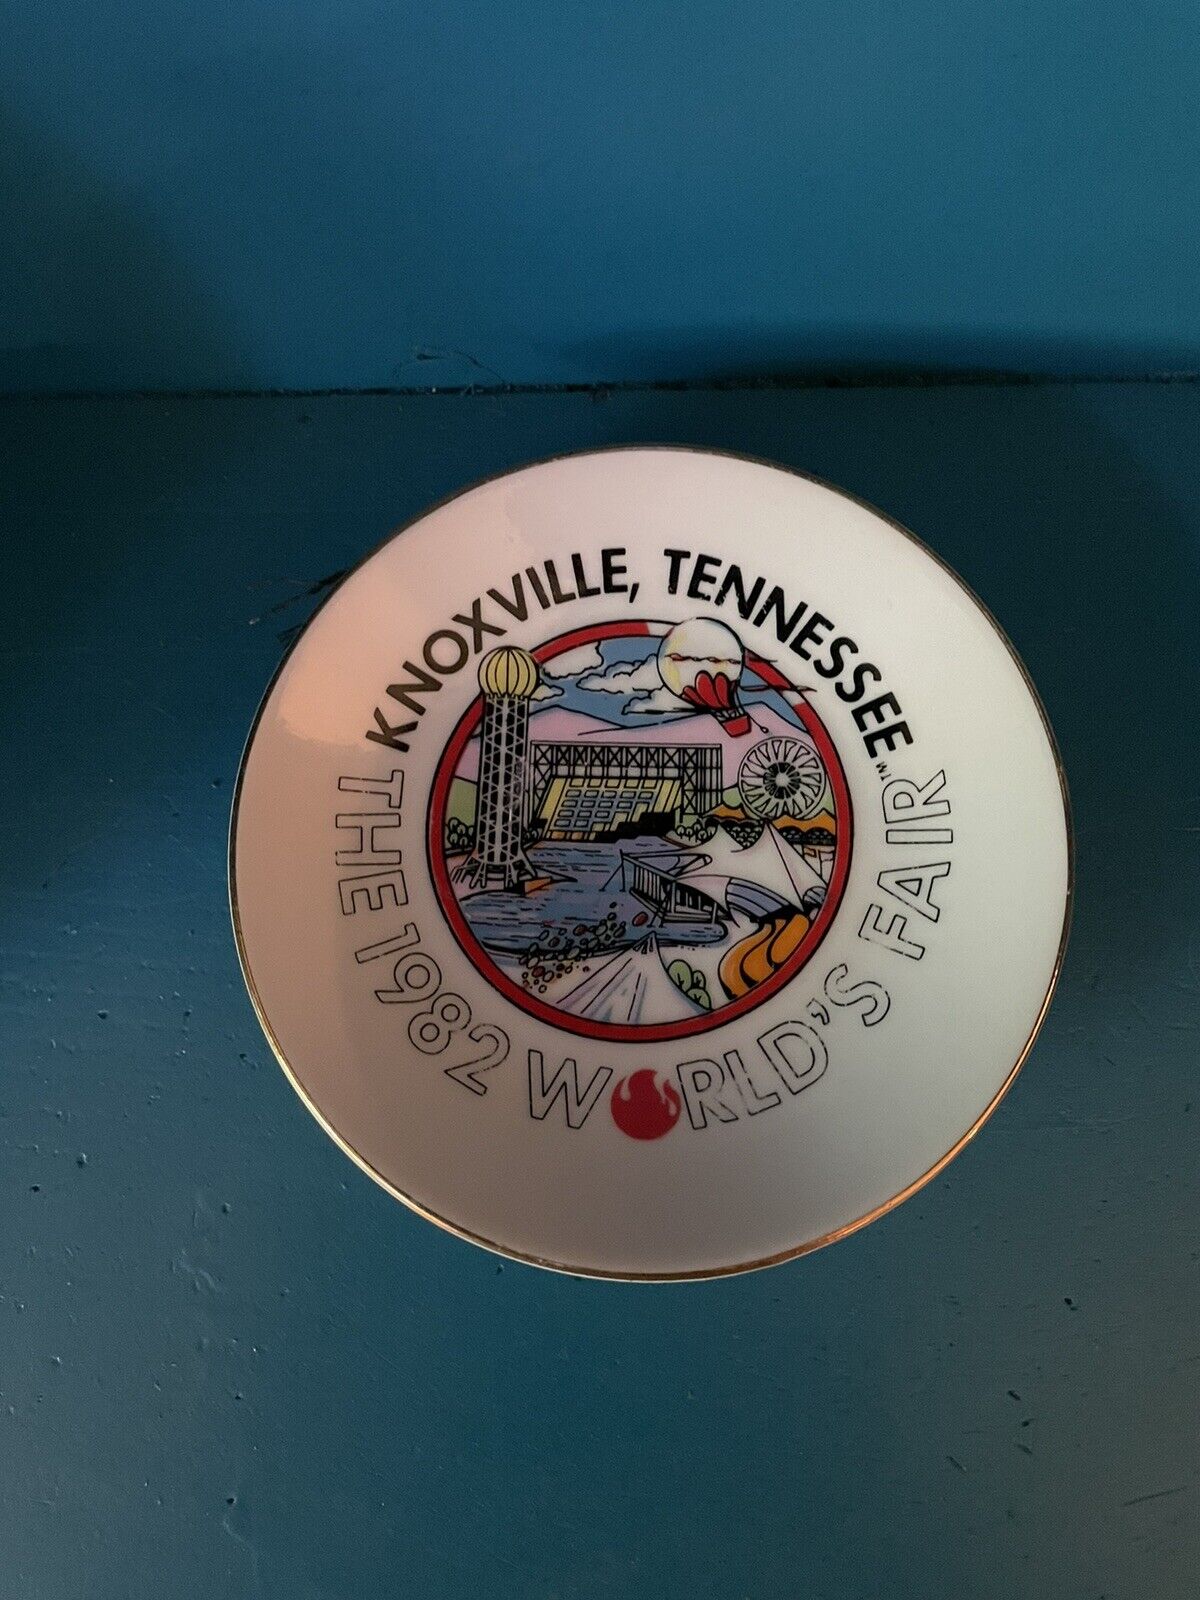 Vintage 1982 World’s Fair Knoxville Tennessee Trinket Souvenir Plate